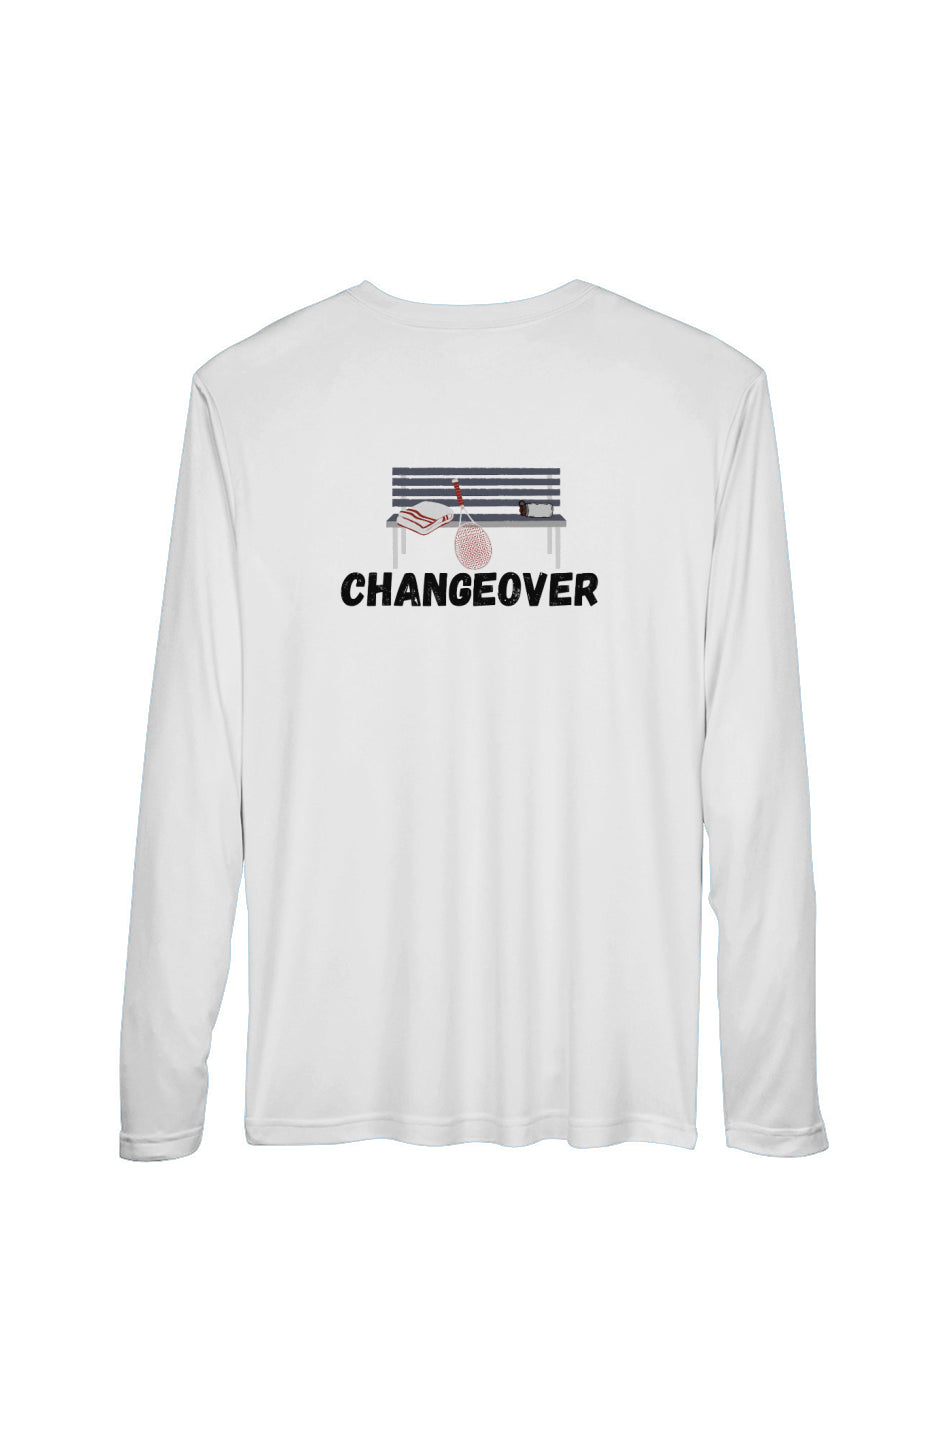 Changeover Men's Long-Sleeve Performance T-Shirt